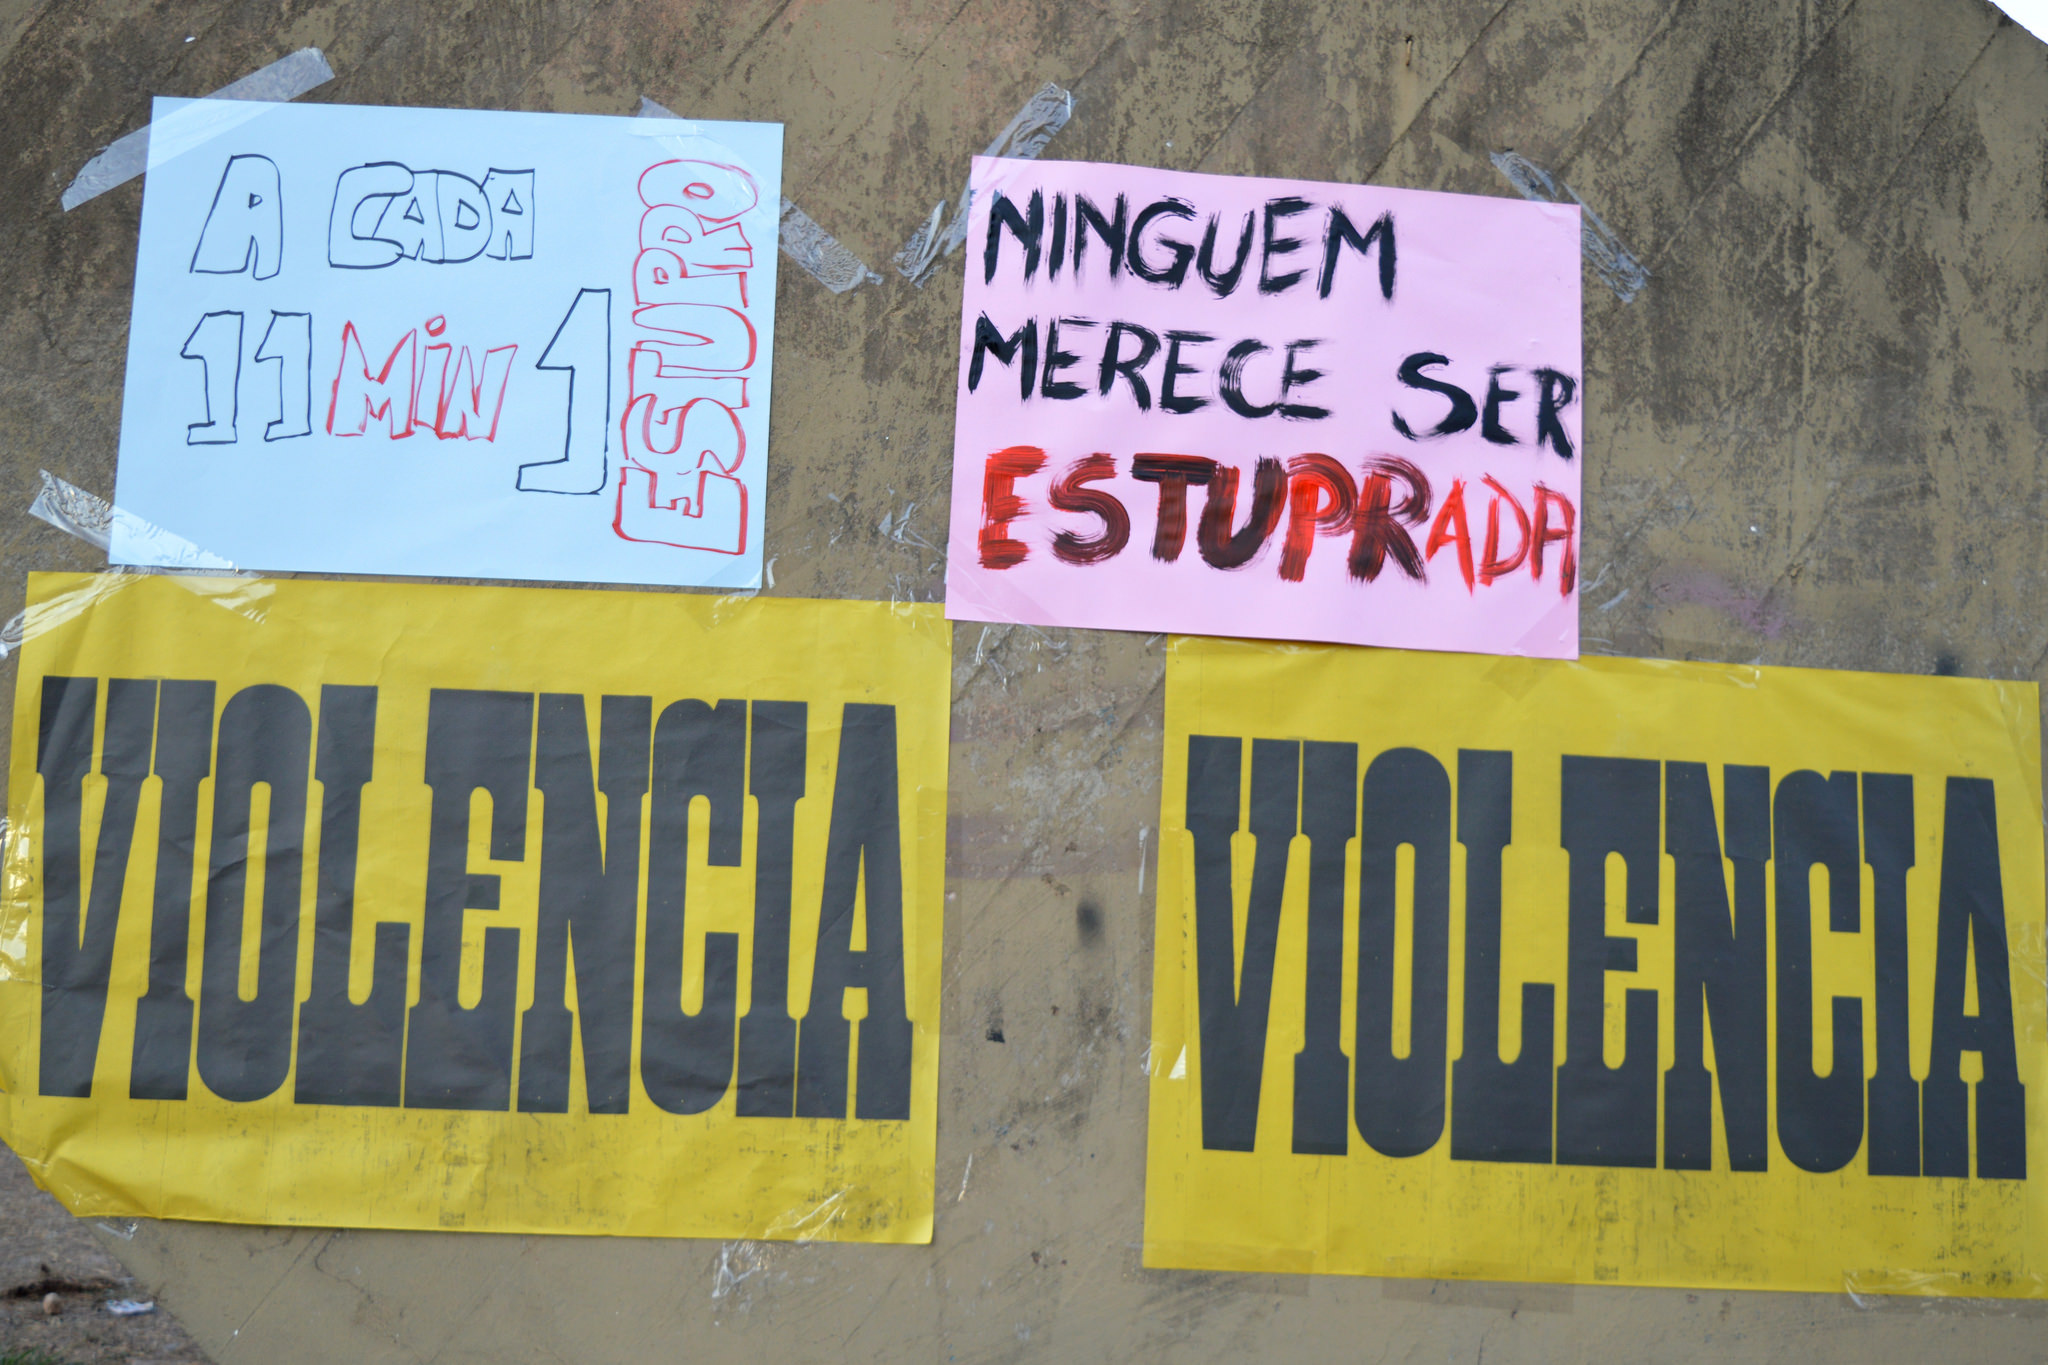 Mudou algo no modo do brasileiro ver o estupro?